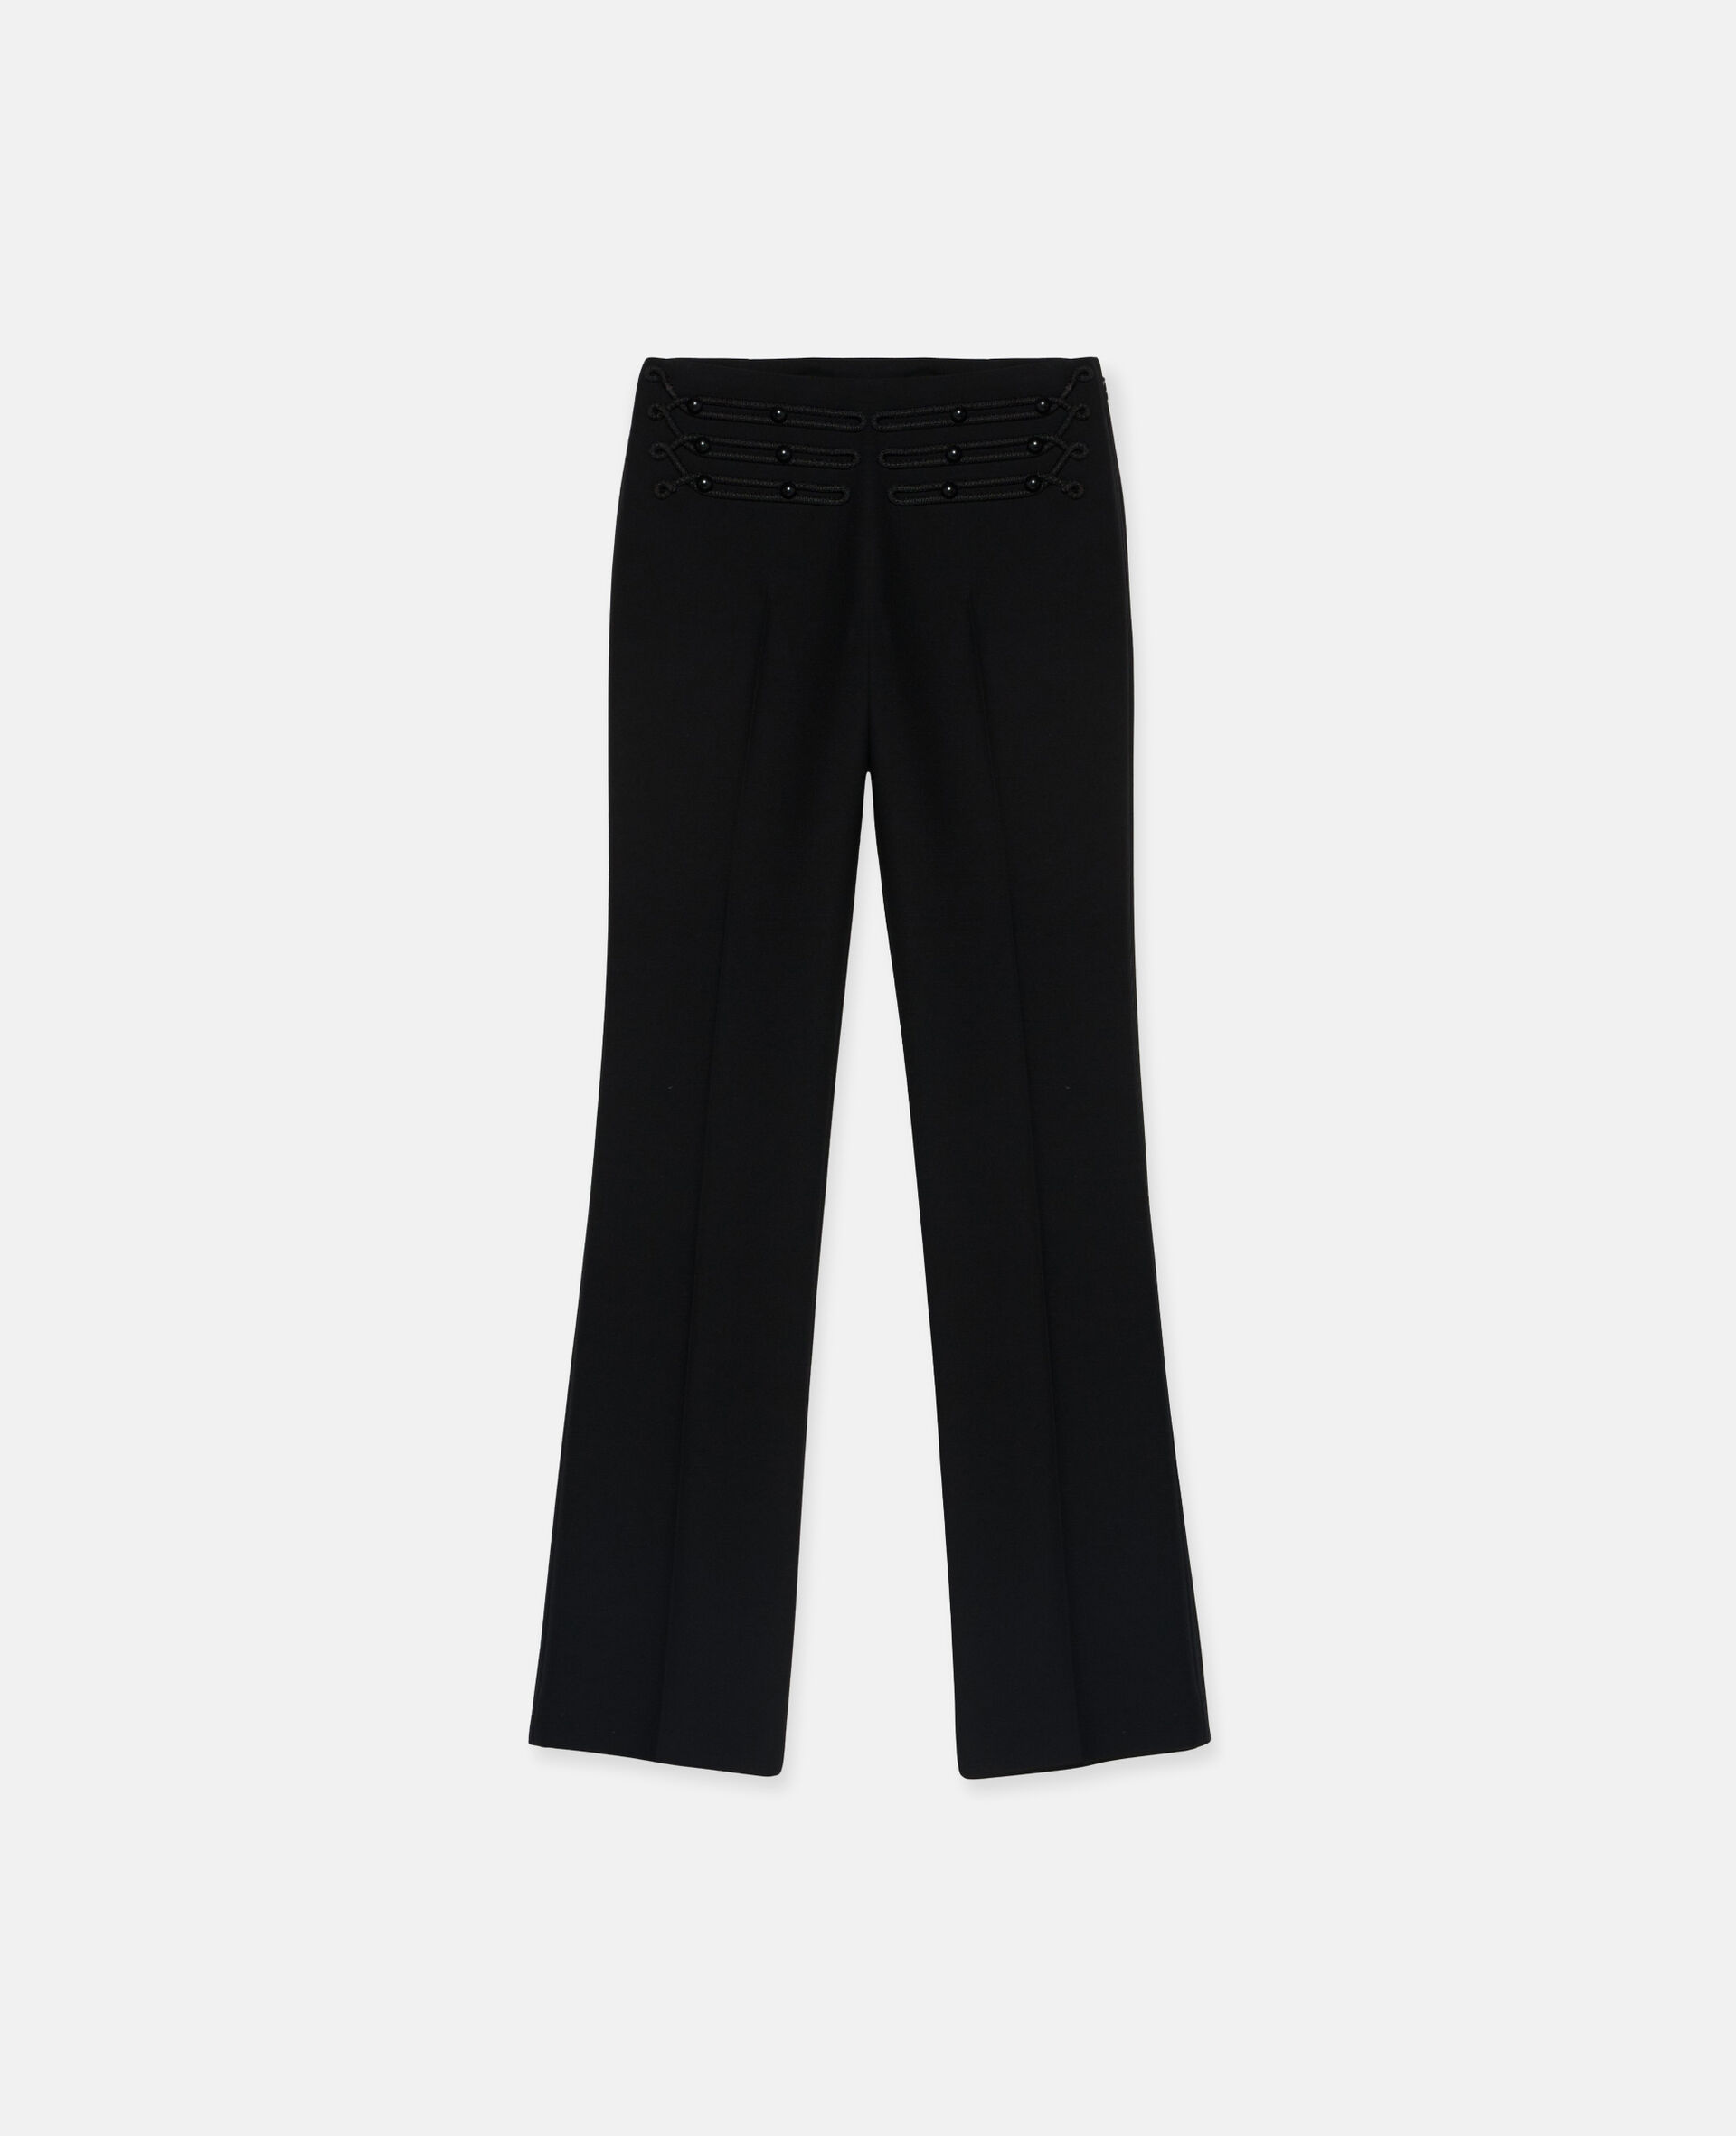 Braided Cord Slim Fit Trousers-Multicolour-medium